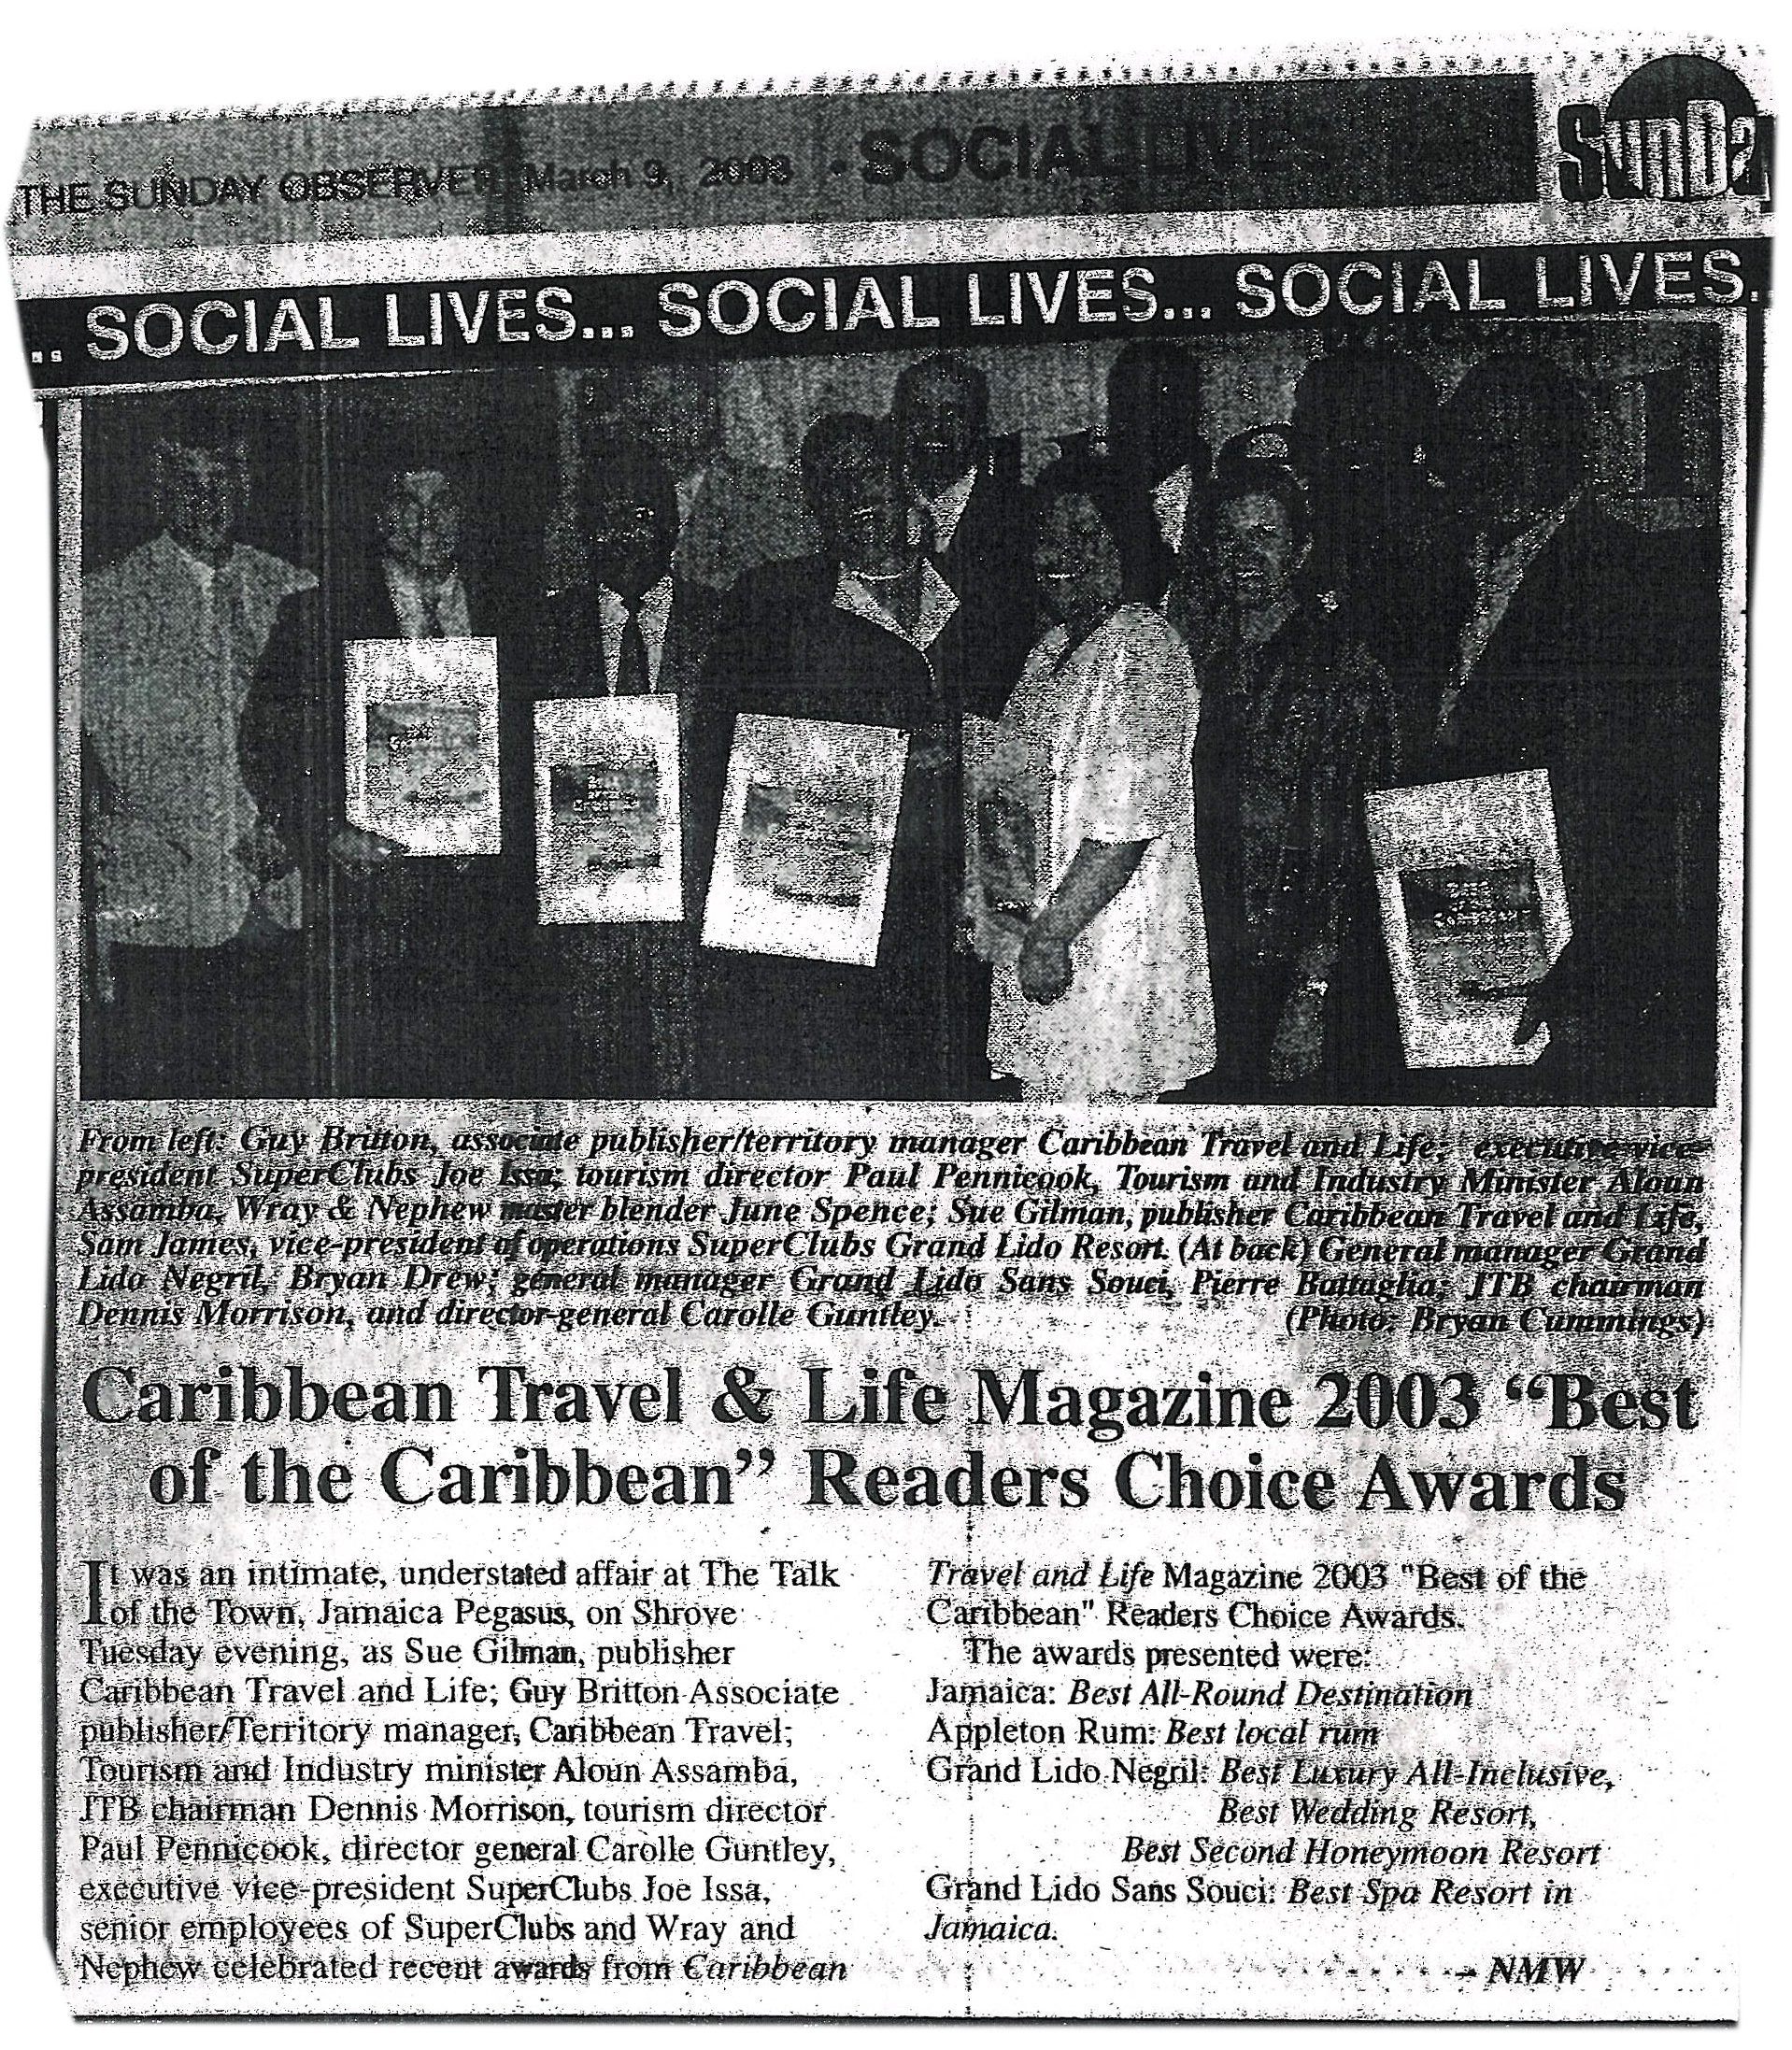 Caribbean Travel & Life Magazine 2003 “Best of the Caribbean” 